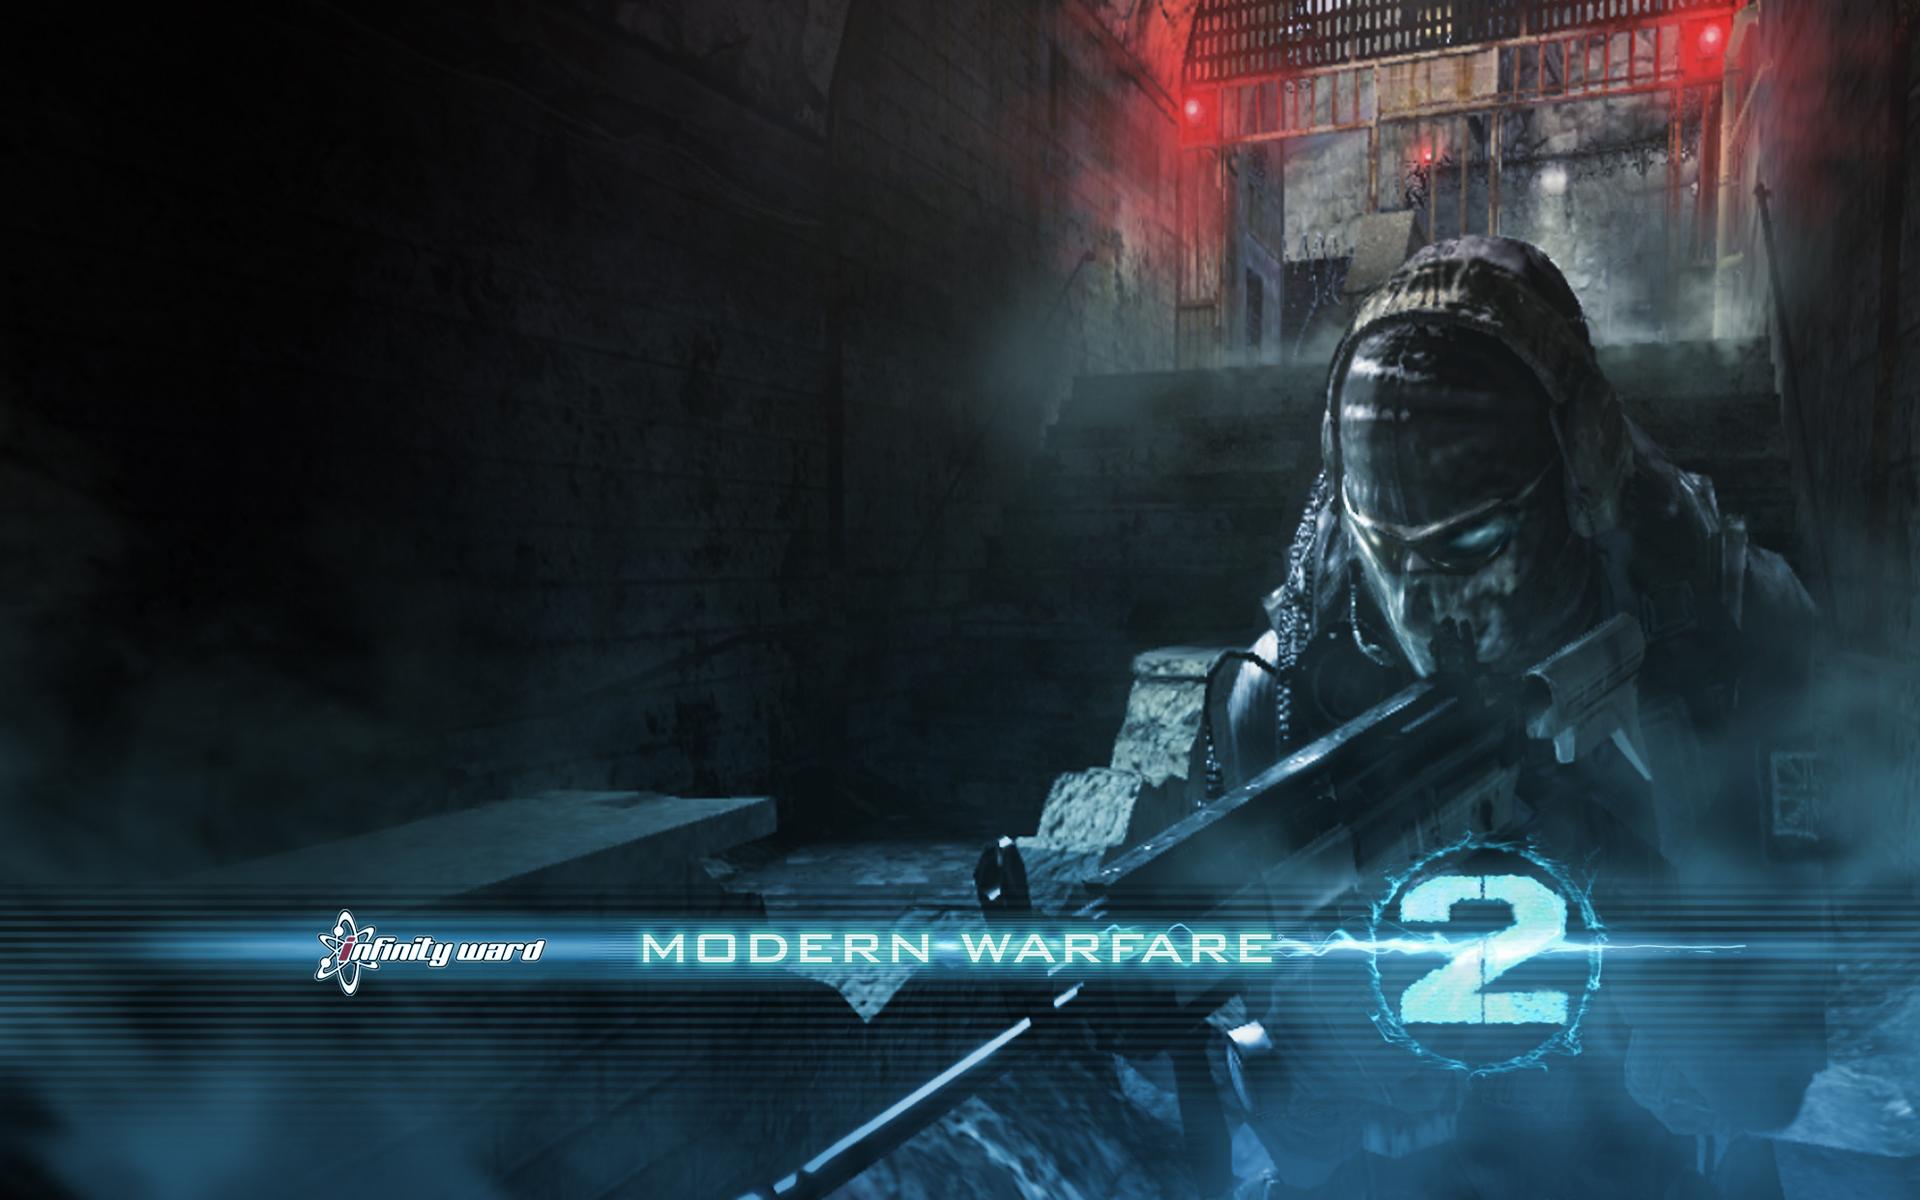 Modern Warfare 2 Wallpaper Hd 6115 Hd Wallpapers in Games   Imagesci 1920x1200